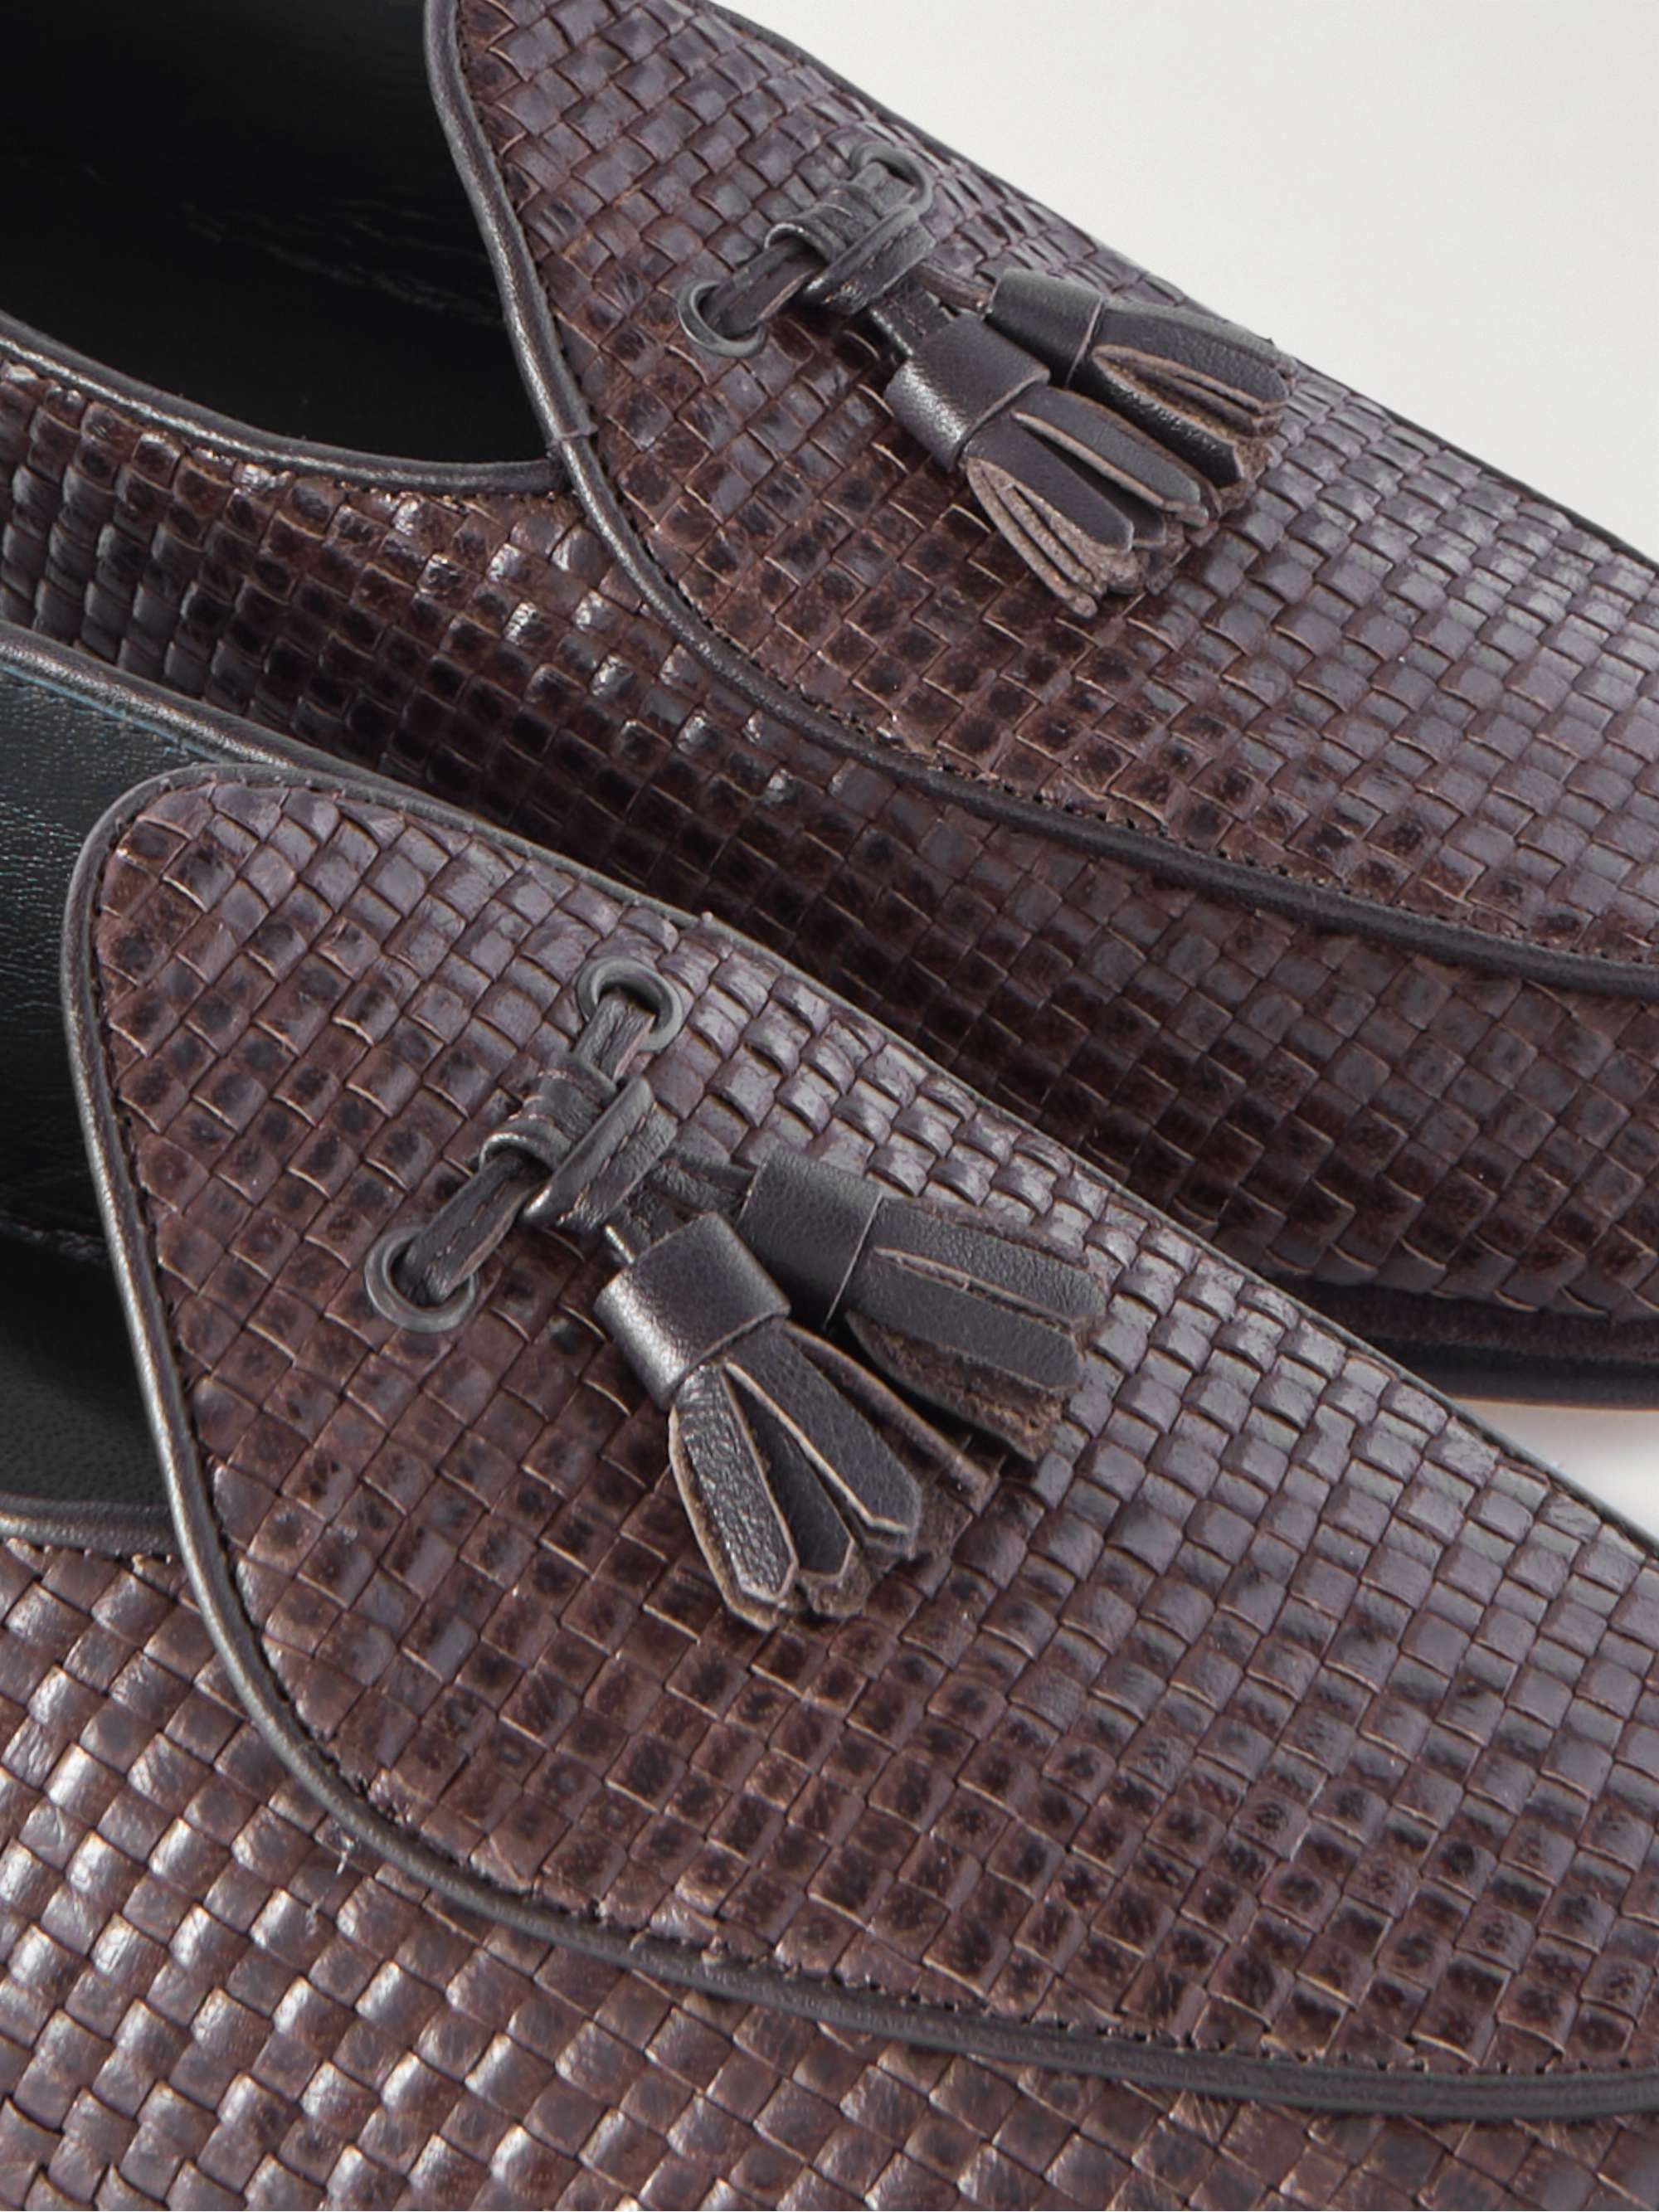 RUBINACCI Marphy Woven Leather Tasseled Loafers